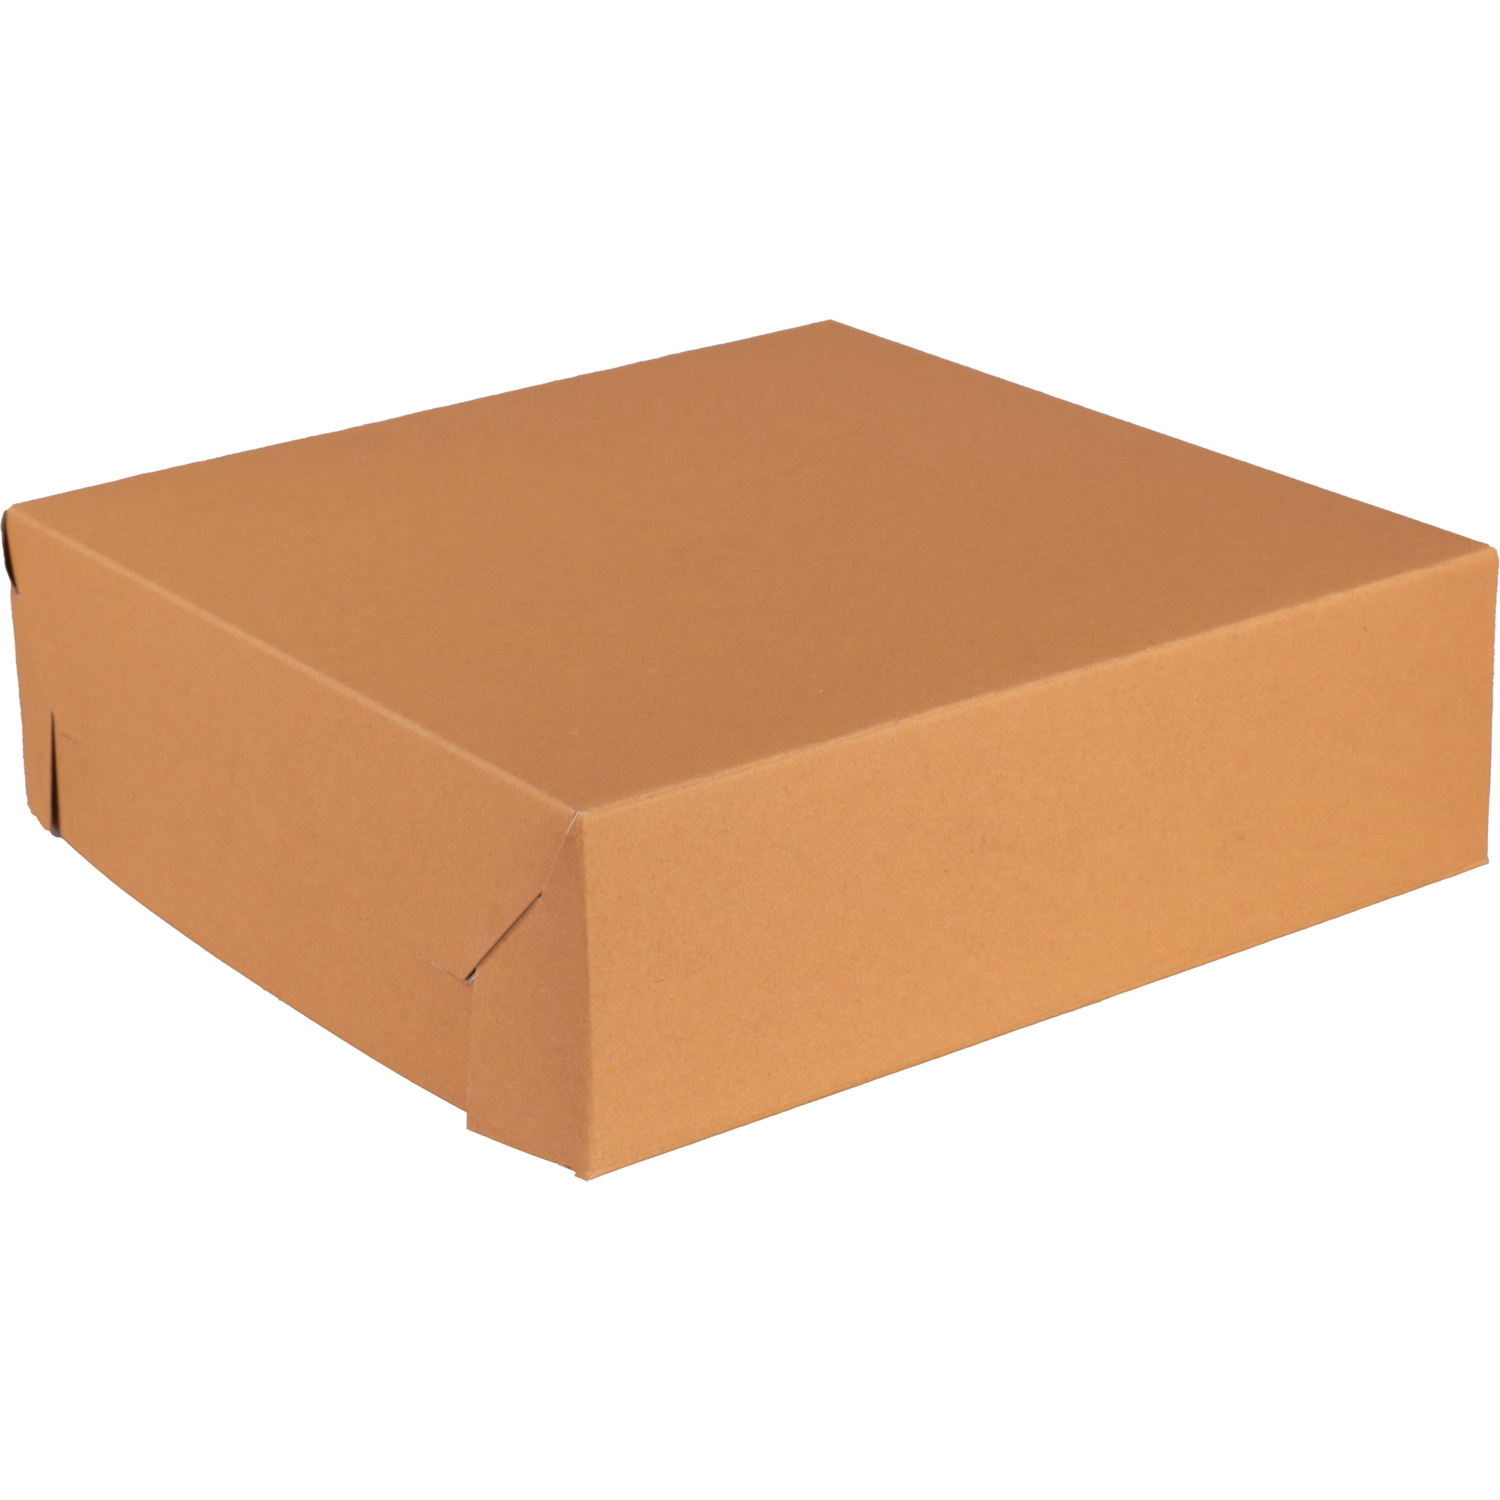 Biodore Swan-neck box, pulp, 30x30x9cm, brown  1